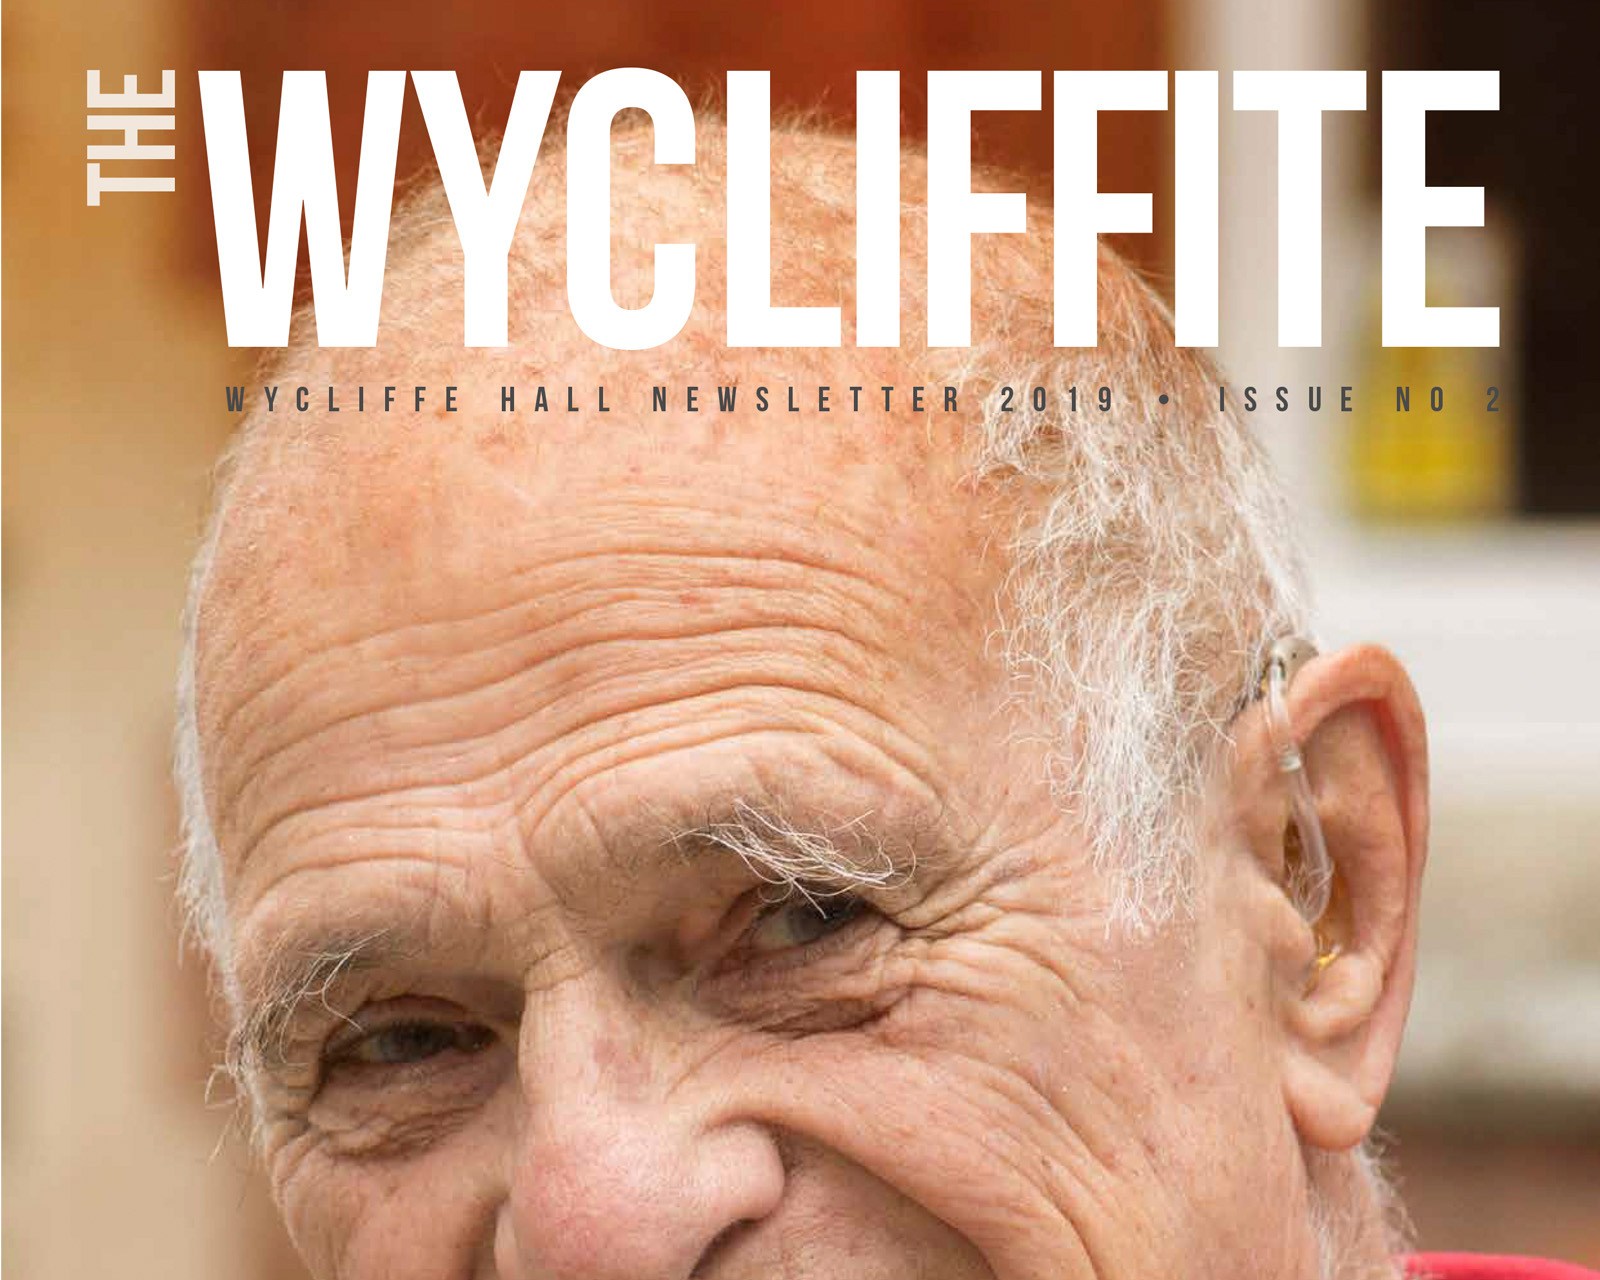 The Wycliffite Alumni Magazine for Wycliffe Hall